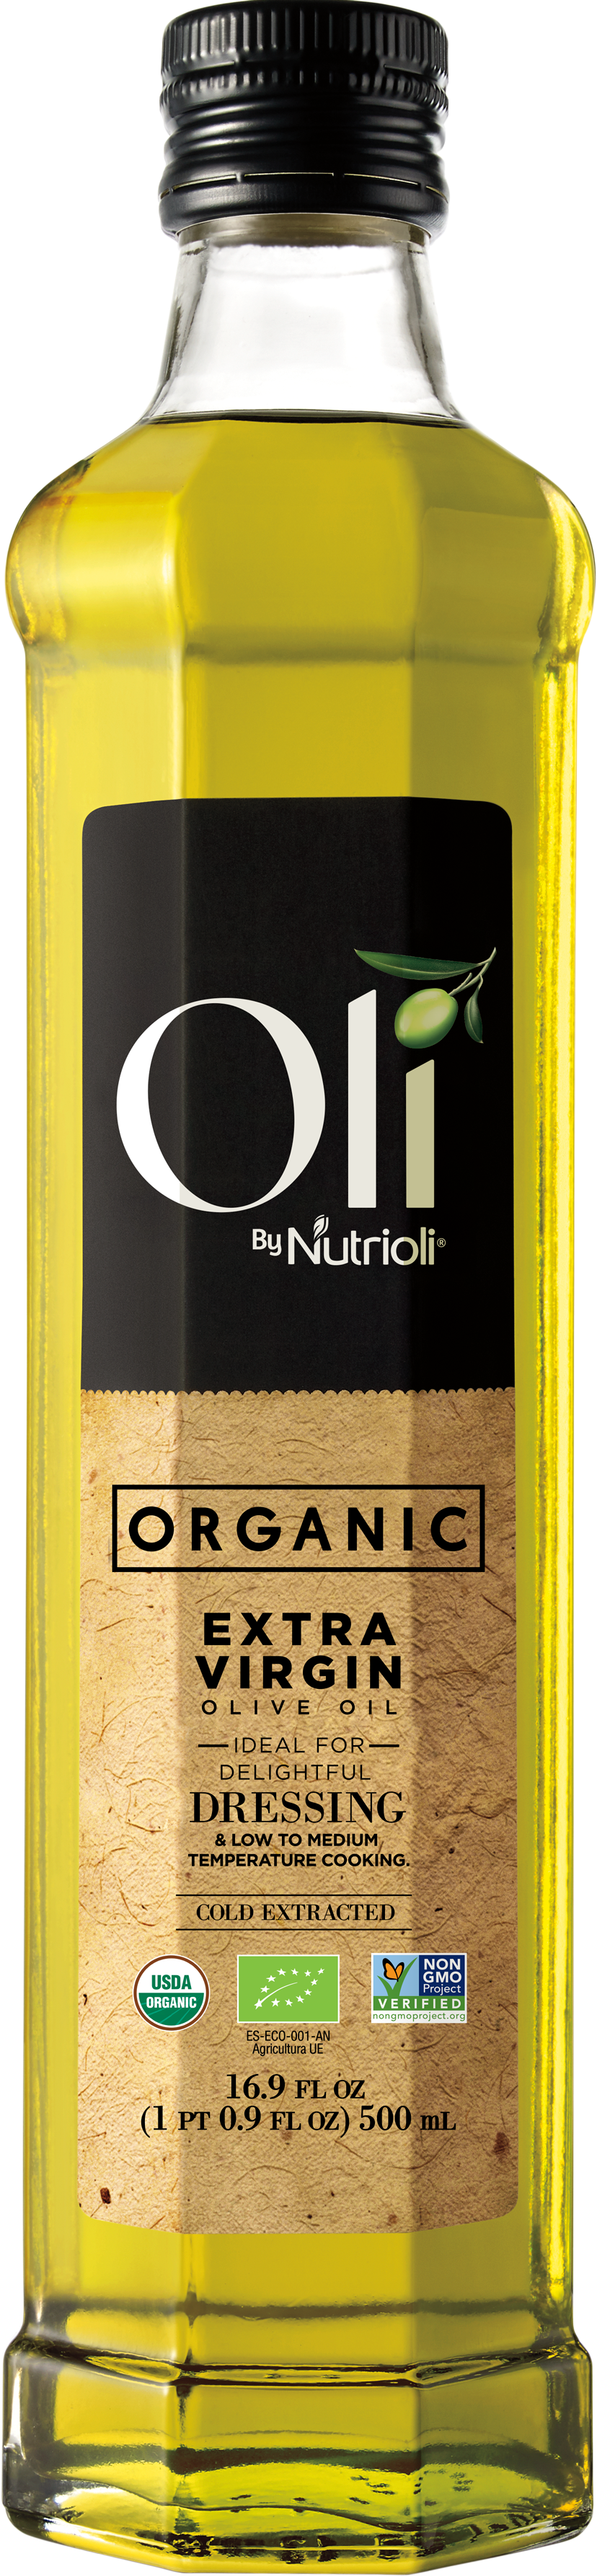 Oli by Nutrioli Extra Virgin Organic 500